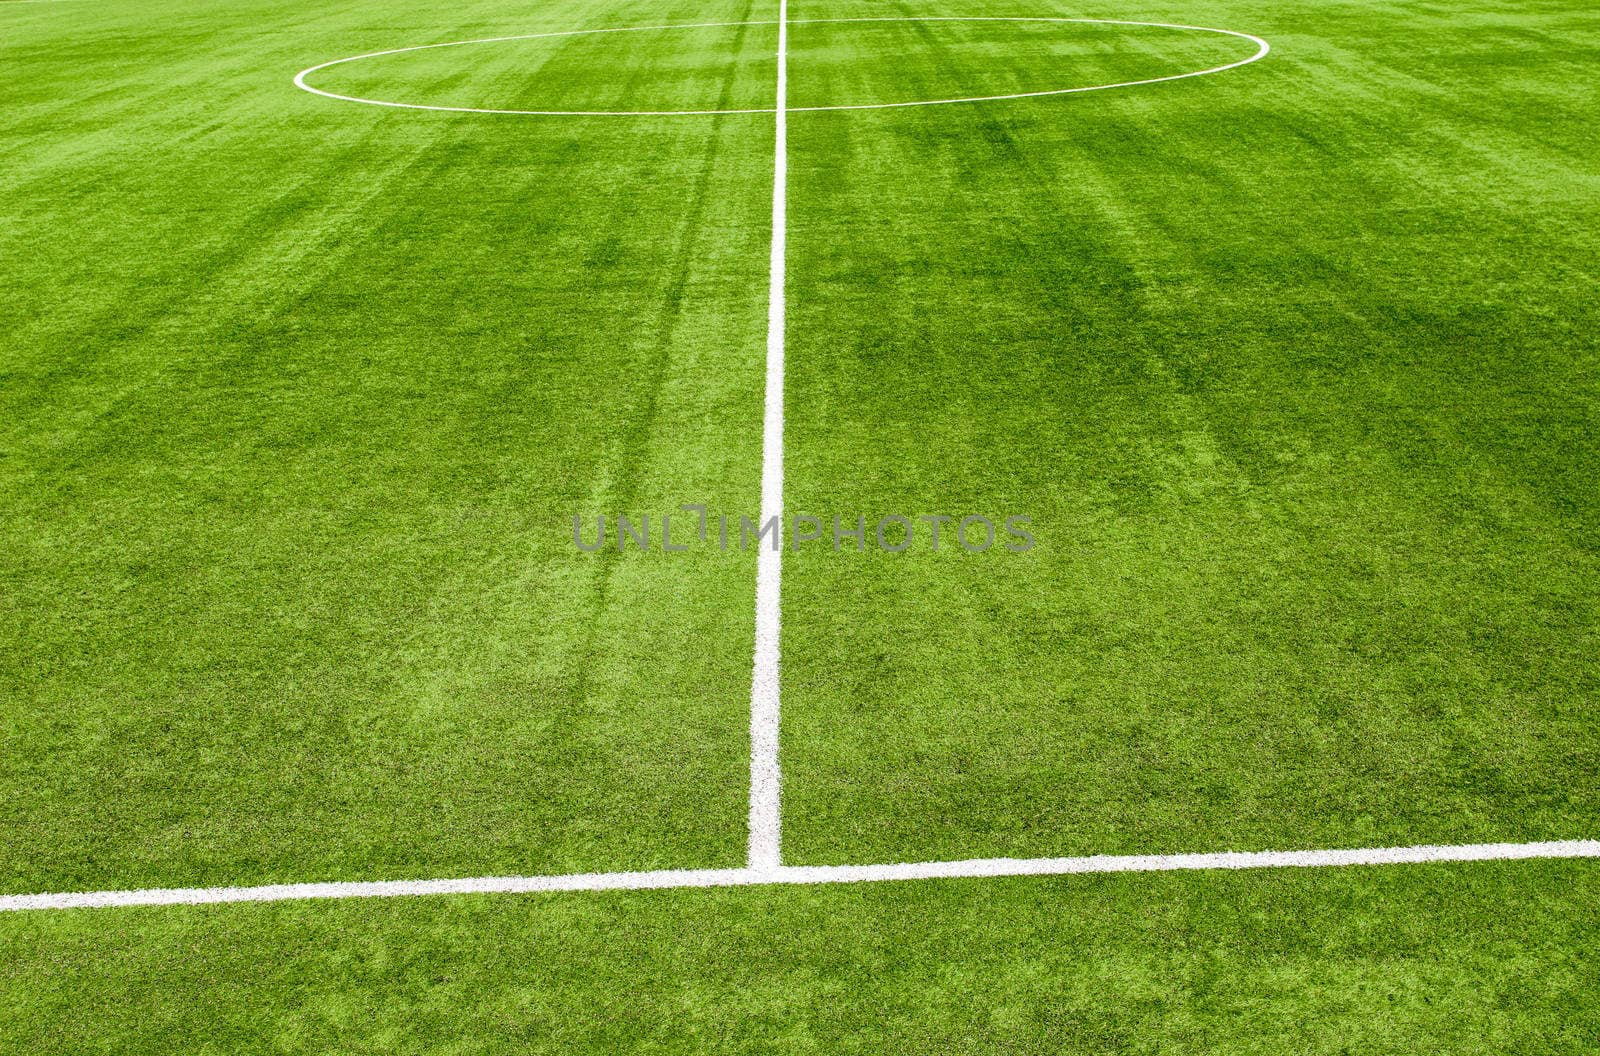 soccerl grass field by hinnamsaisuy